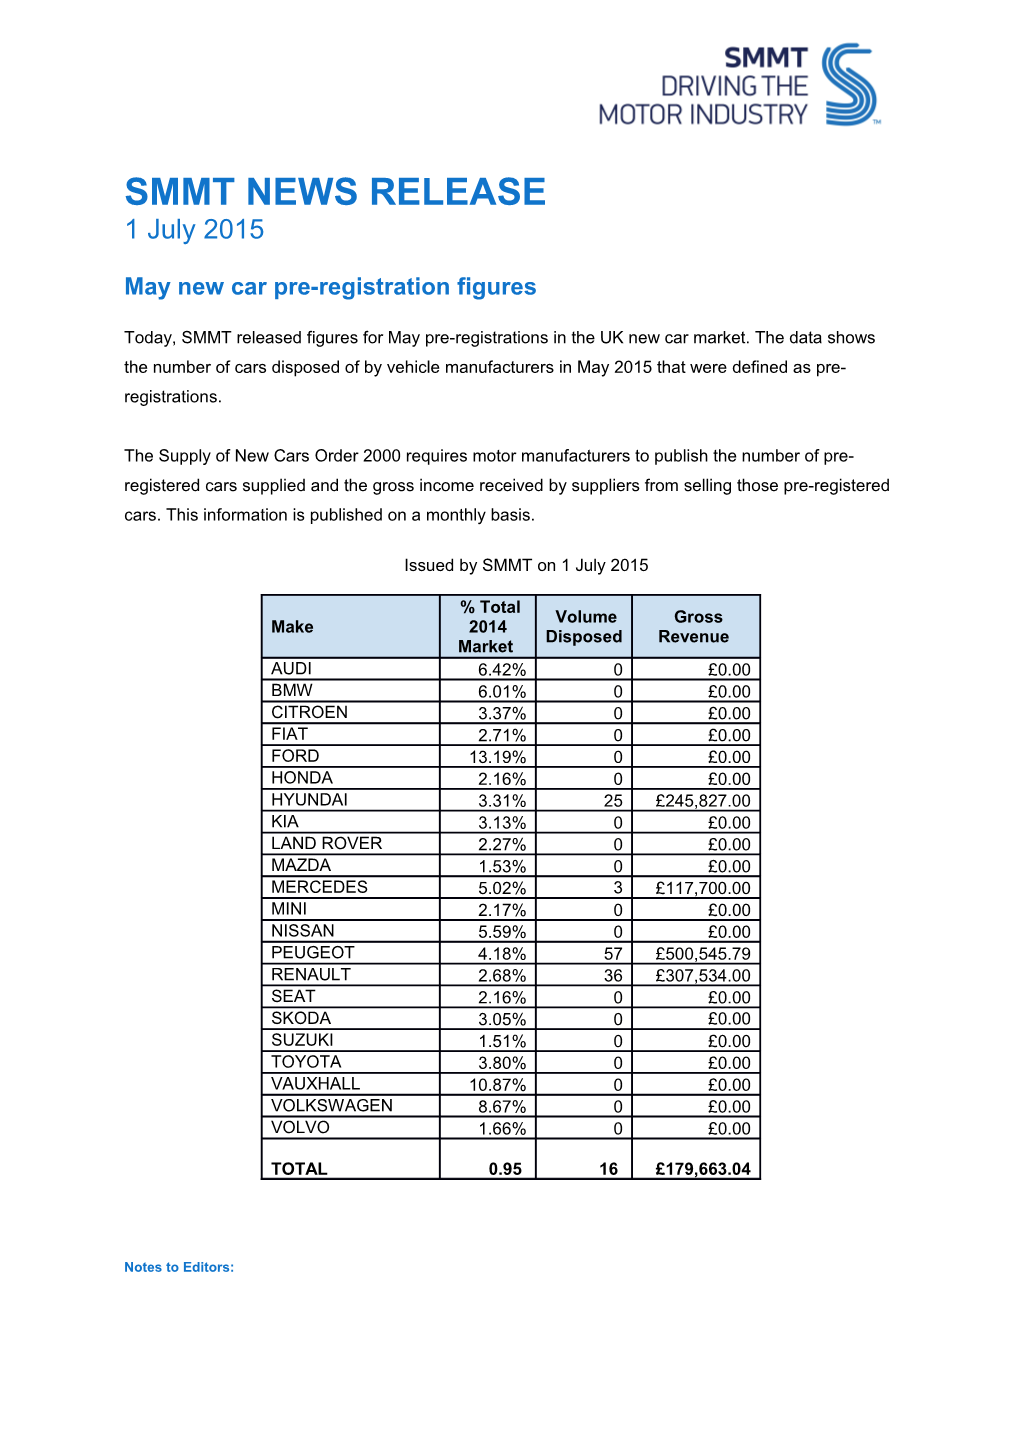 Maynew Car Pre-Registration Figures